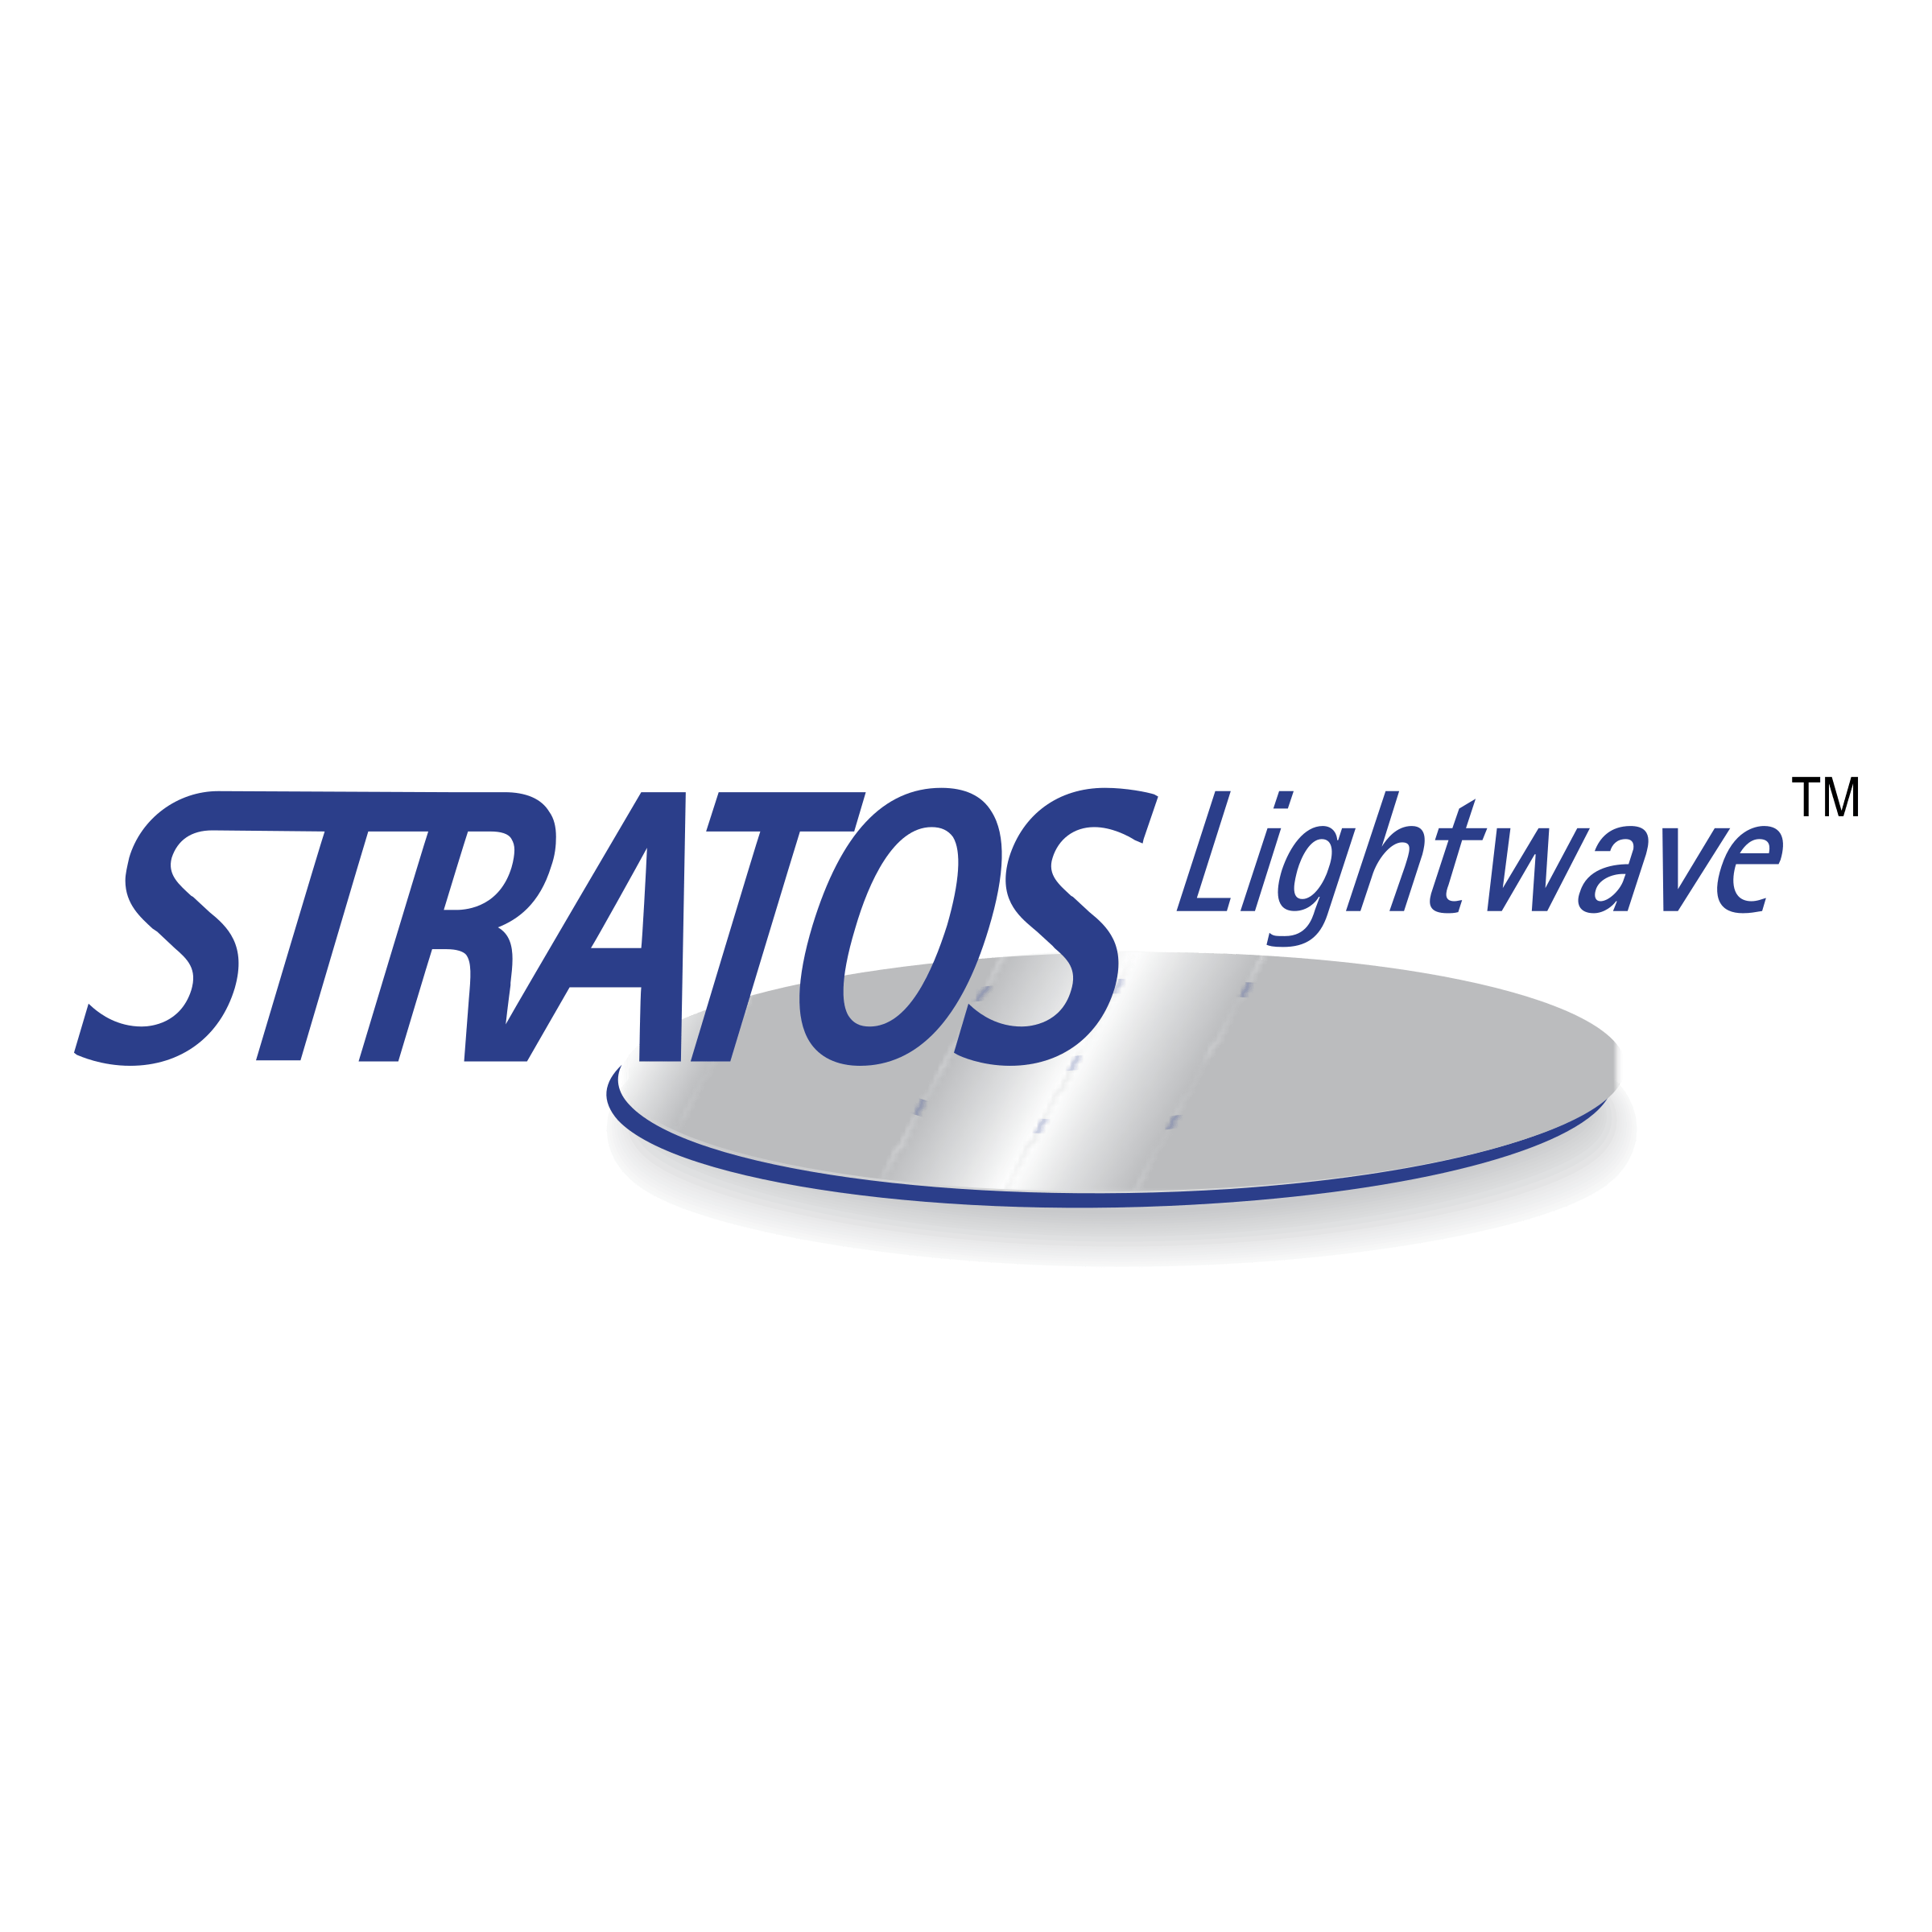 Stratos Logo - Stratos Lightwave Logo PNG Transparent & SVG Vector - Freebie Supply